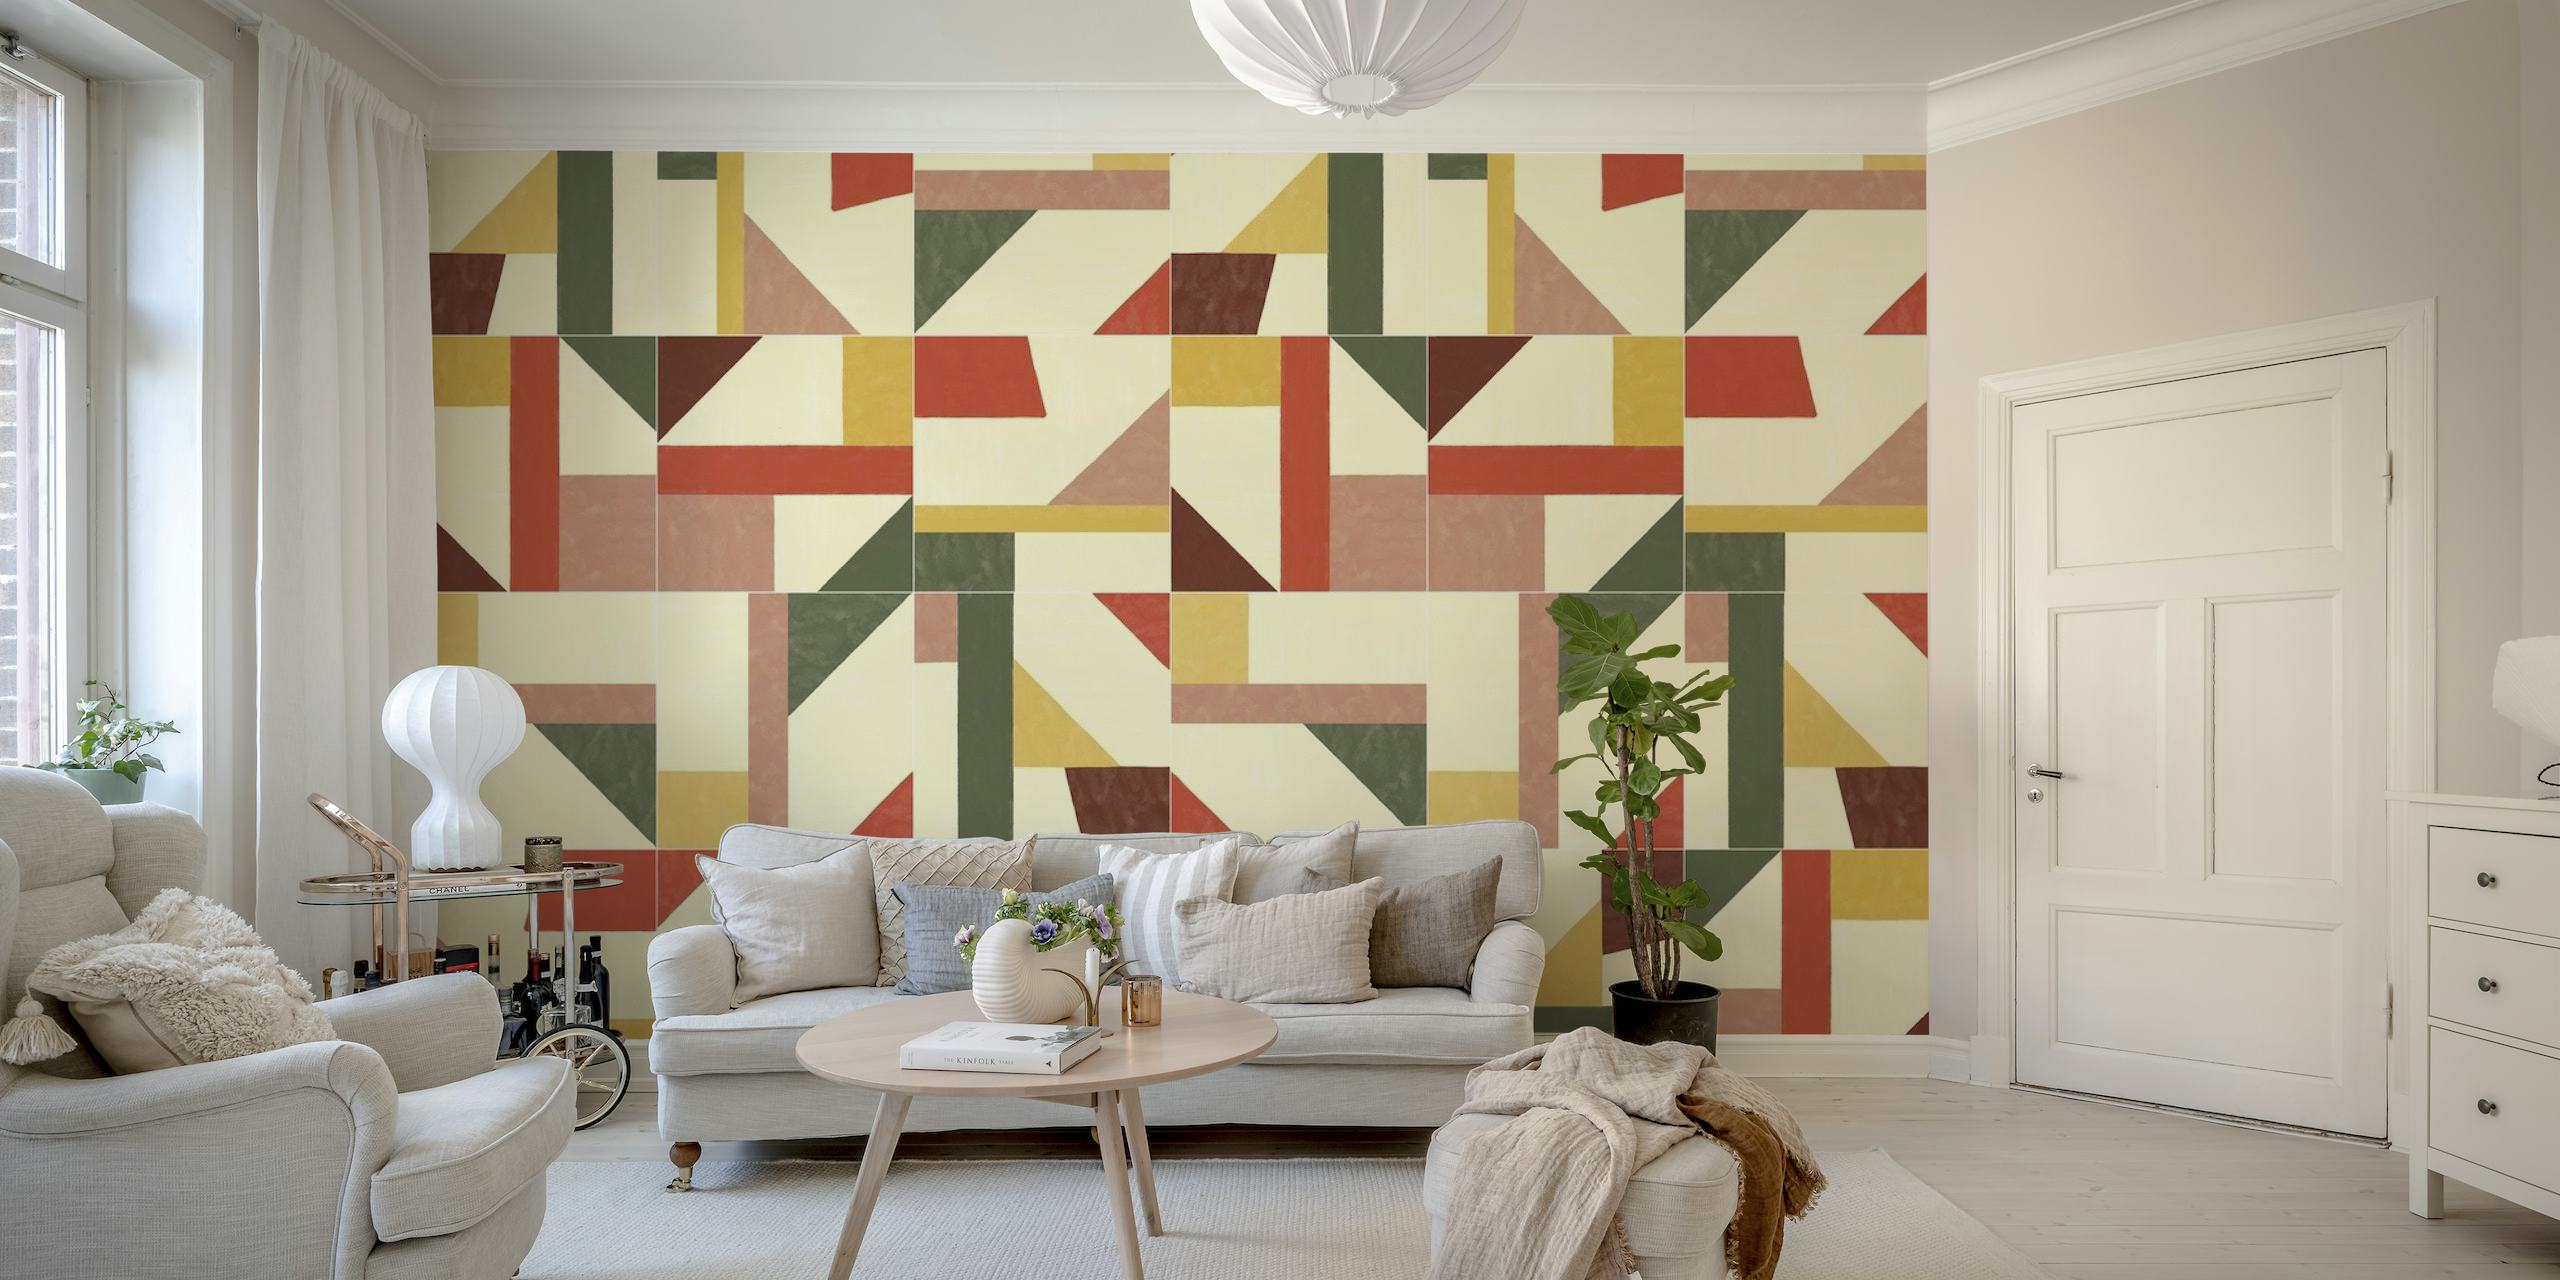 Tangram Wall Tiles Two tapetit